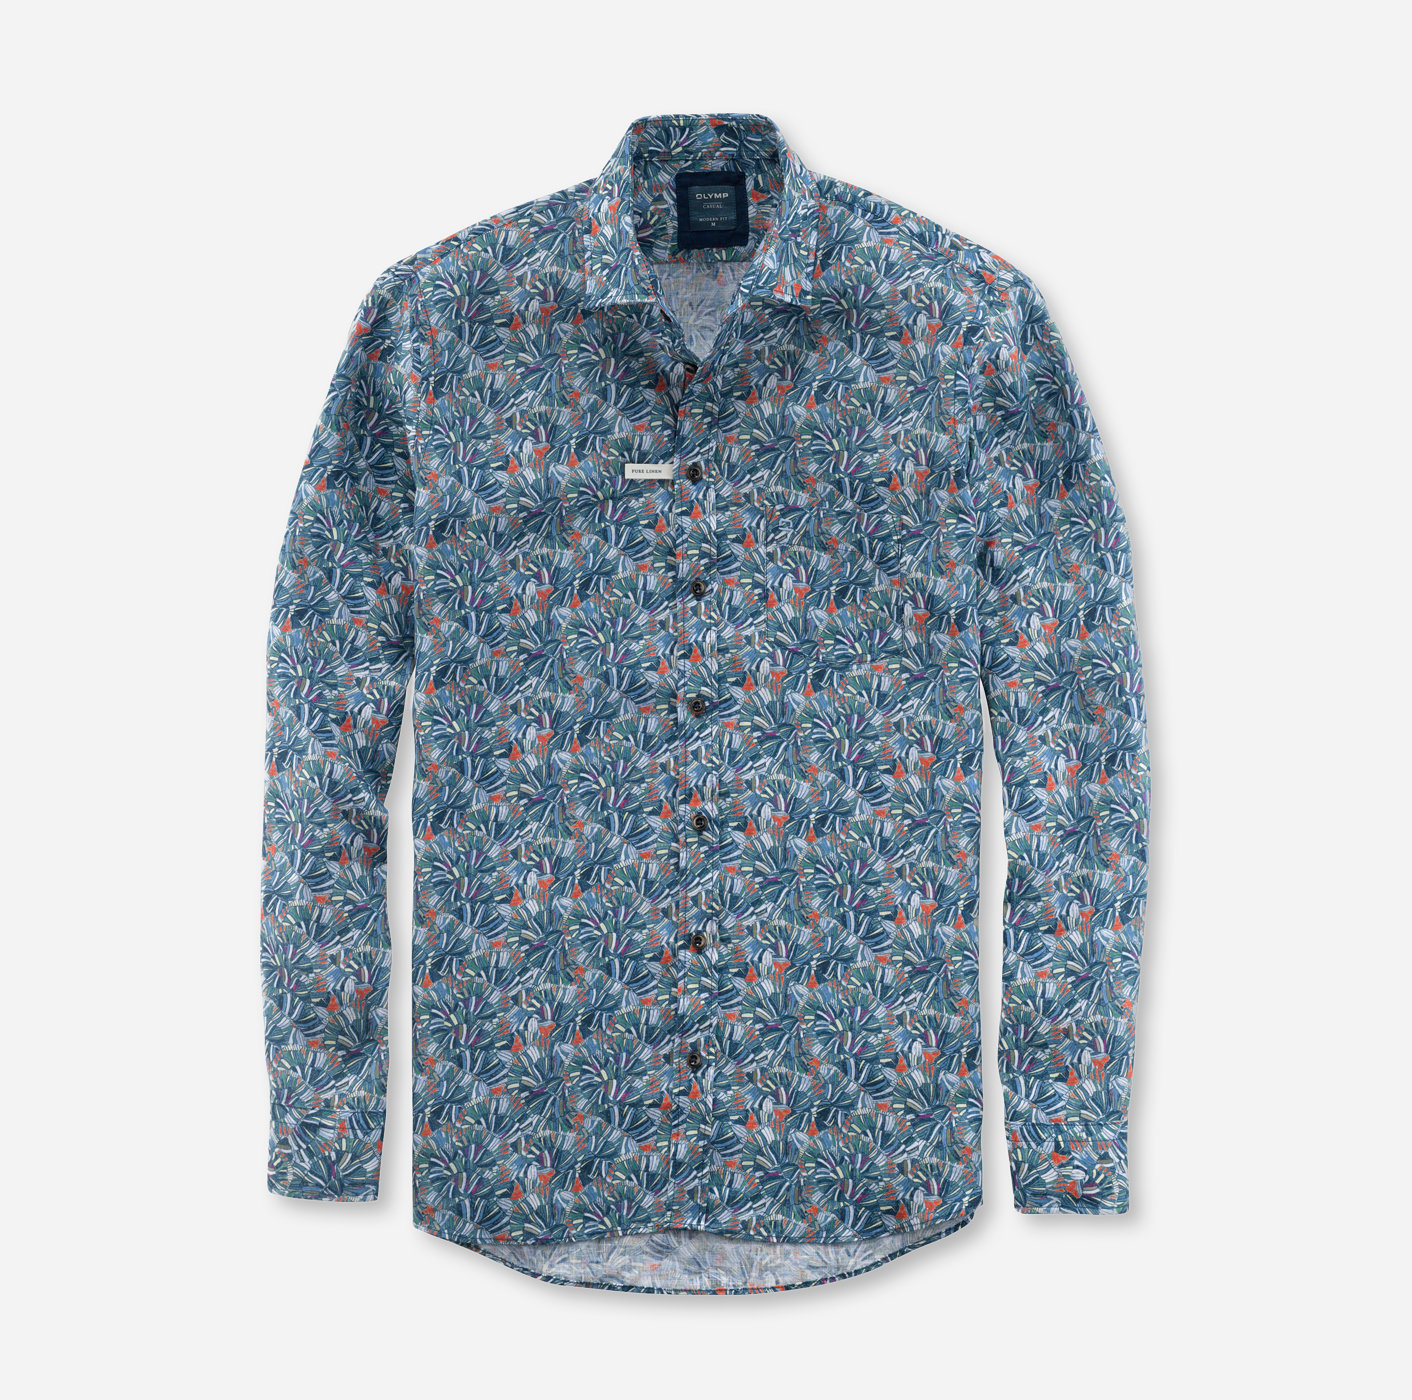 OLYMP Casual, modern fit, Casual shirt, Kent, Fuchsia